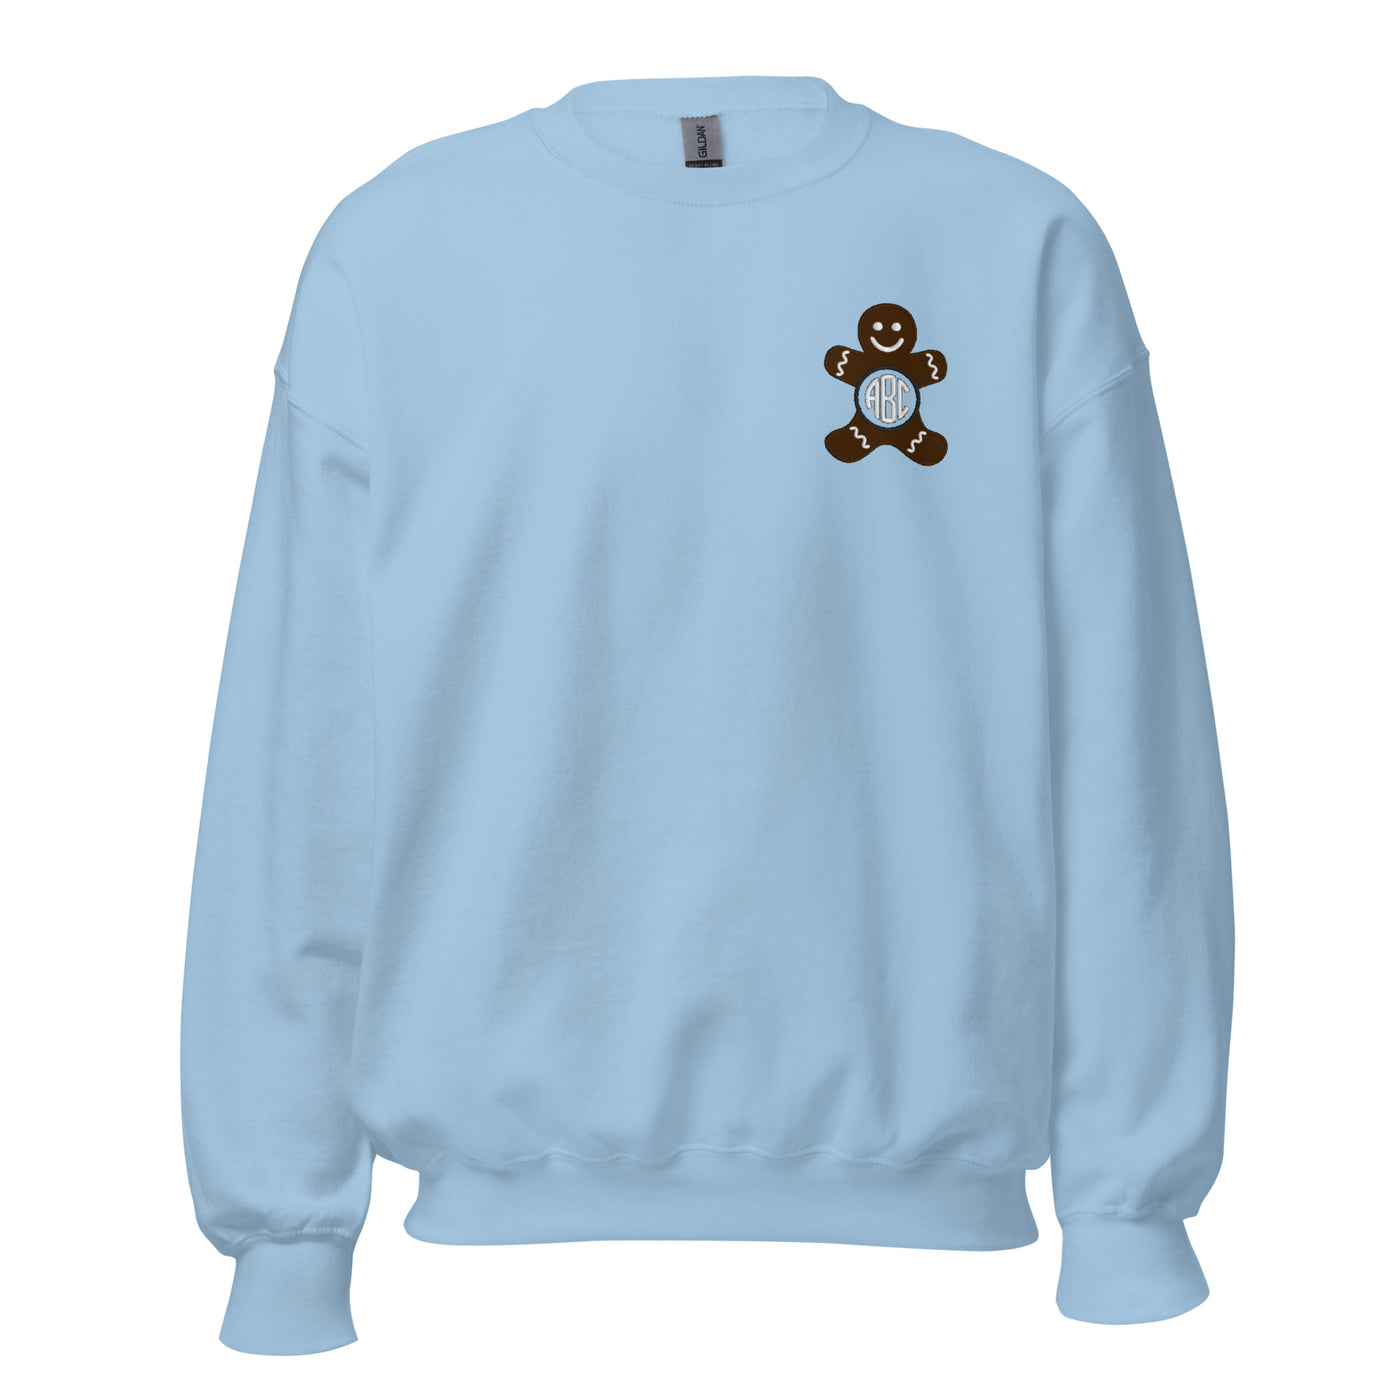 Monogrammed Gingerbread Man Crewneck Sweatshirt